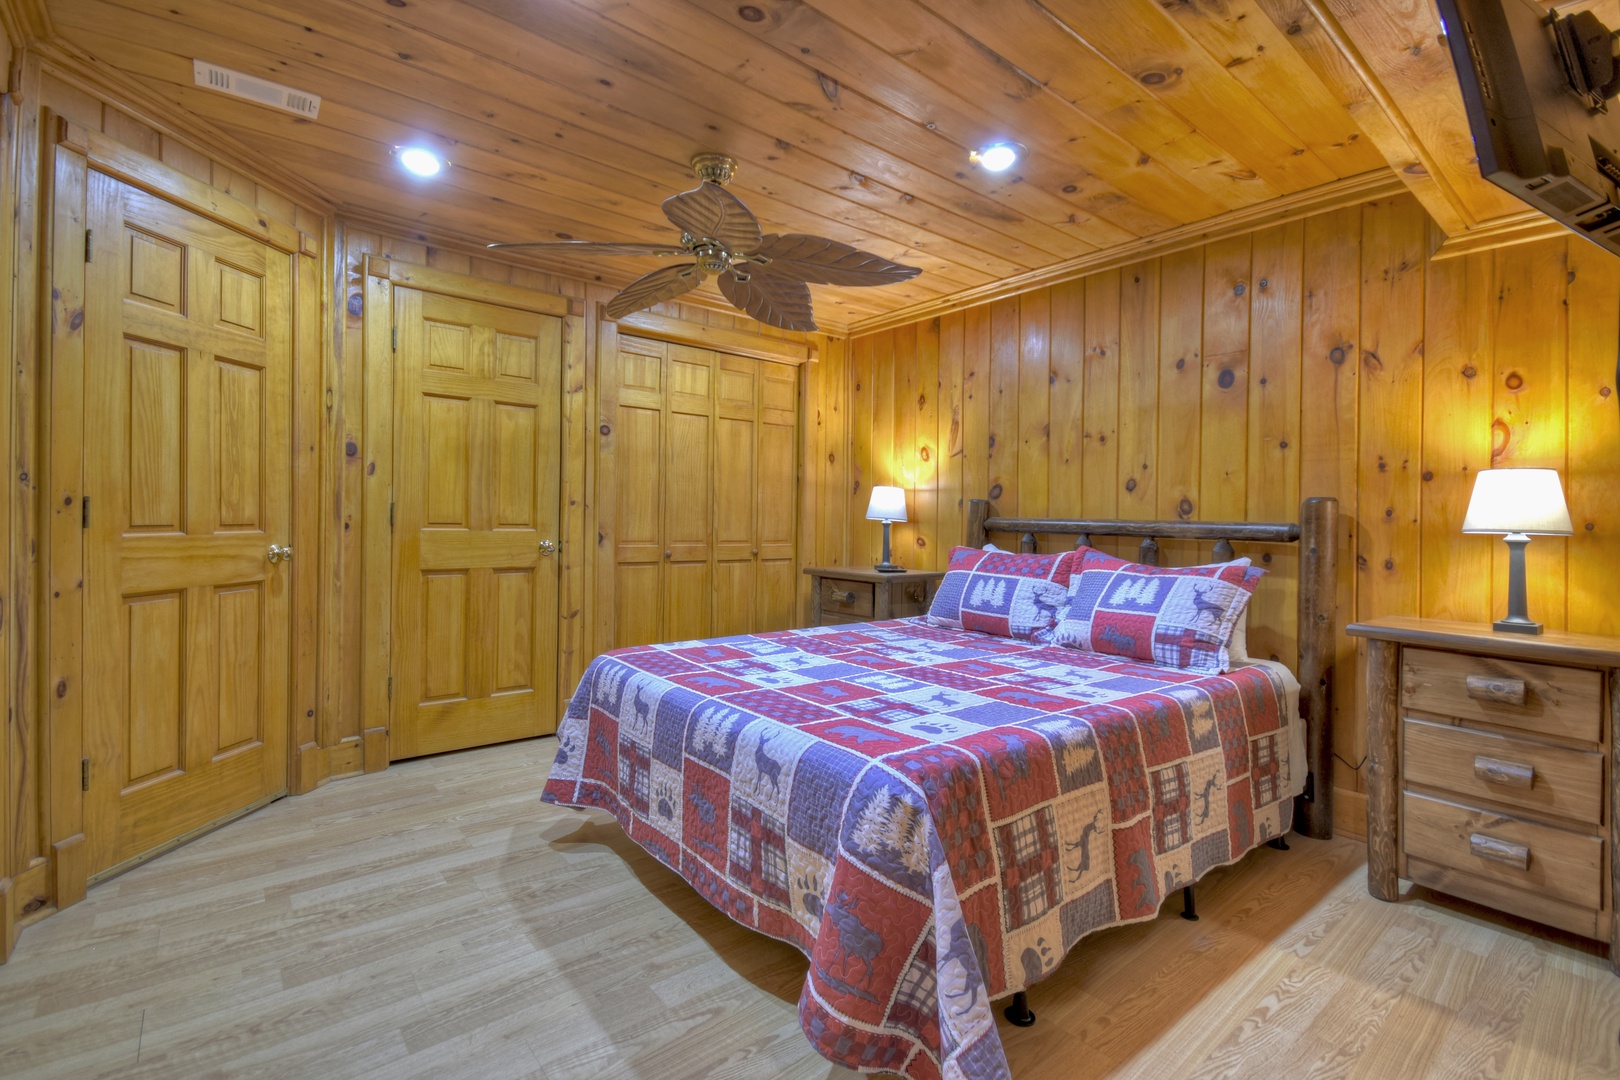 Deer Watch Lodge- Guest bedroom with closet space